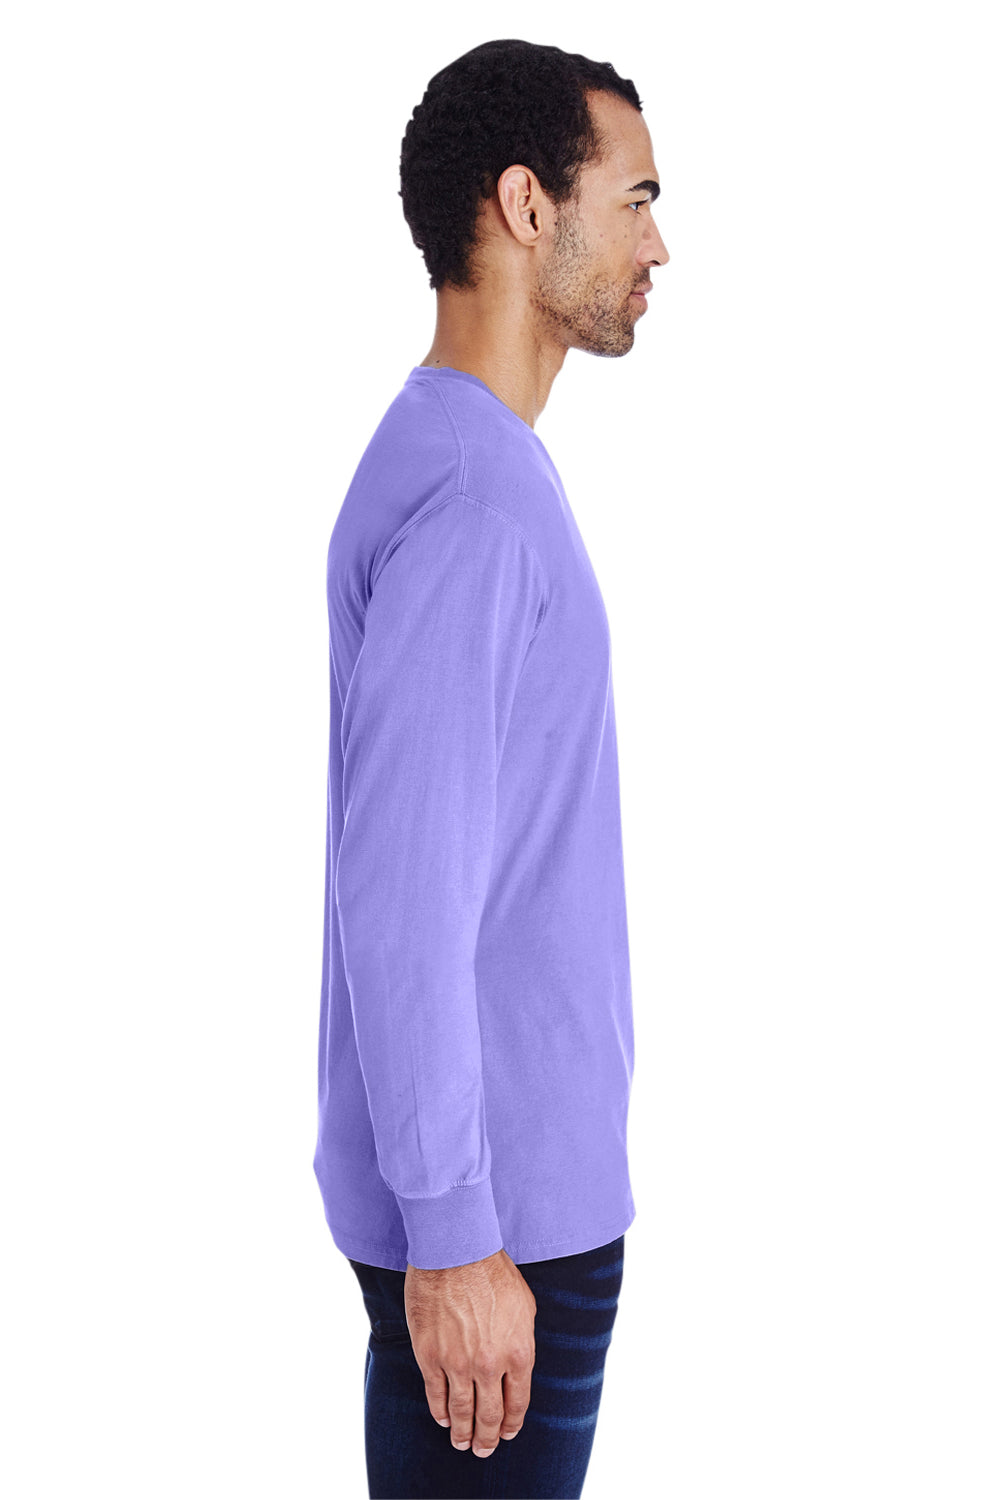 ComfortWash by Hanes GDH200 Long Sleeve Crewneck T-Shirt Lavender Purple Side